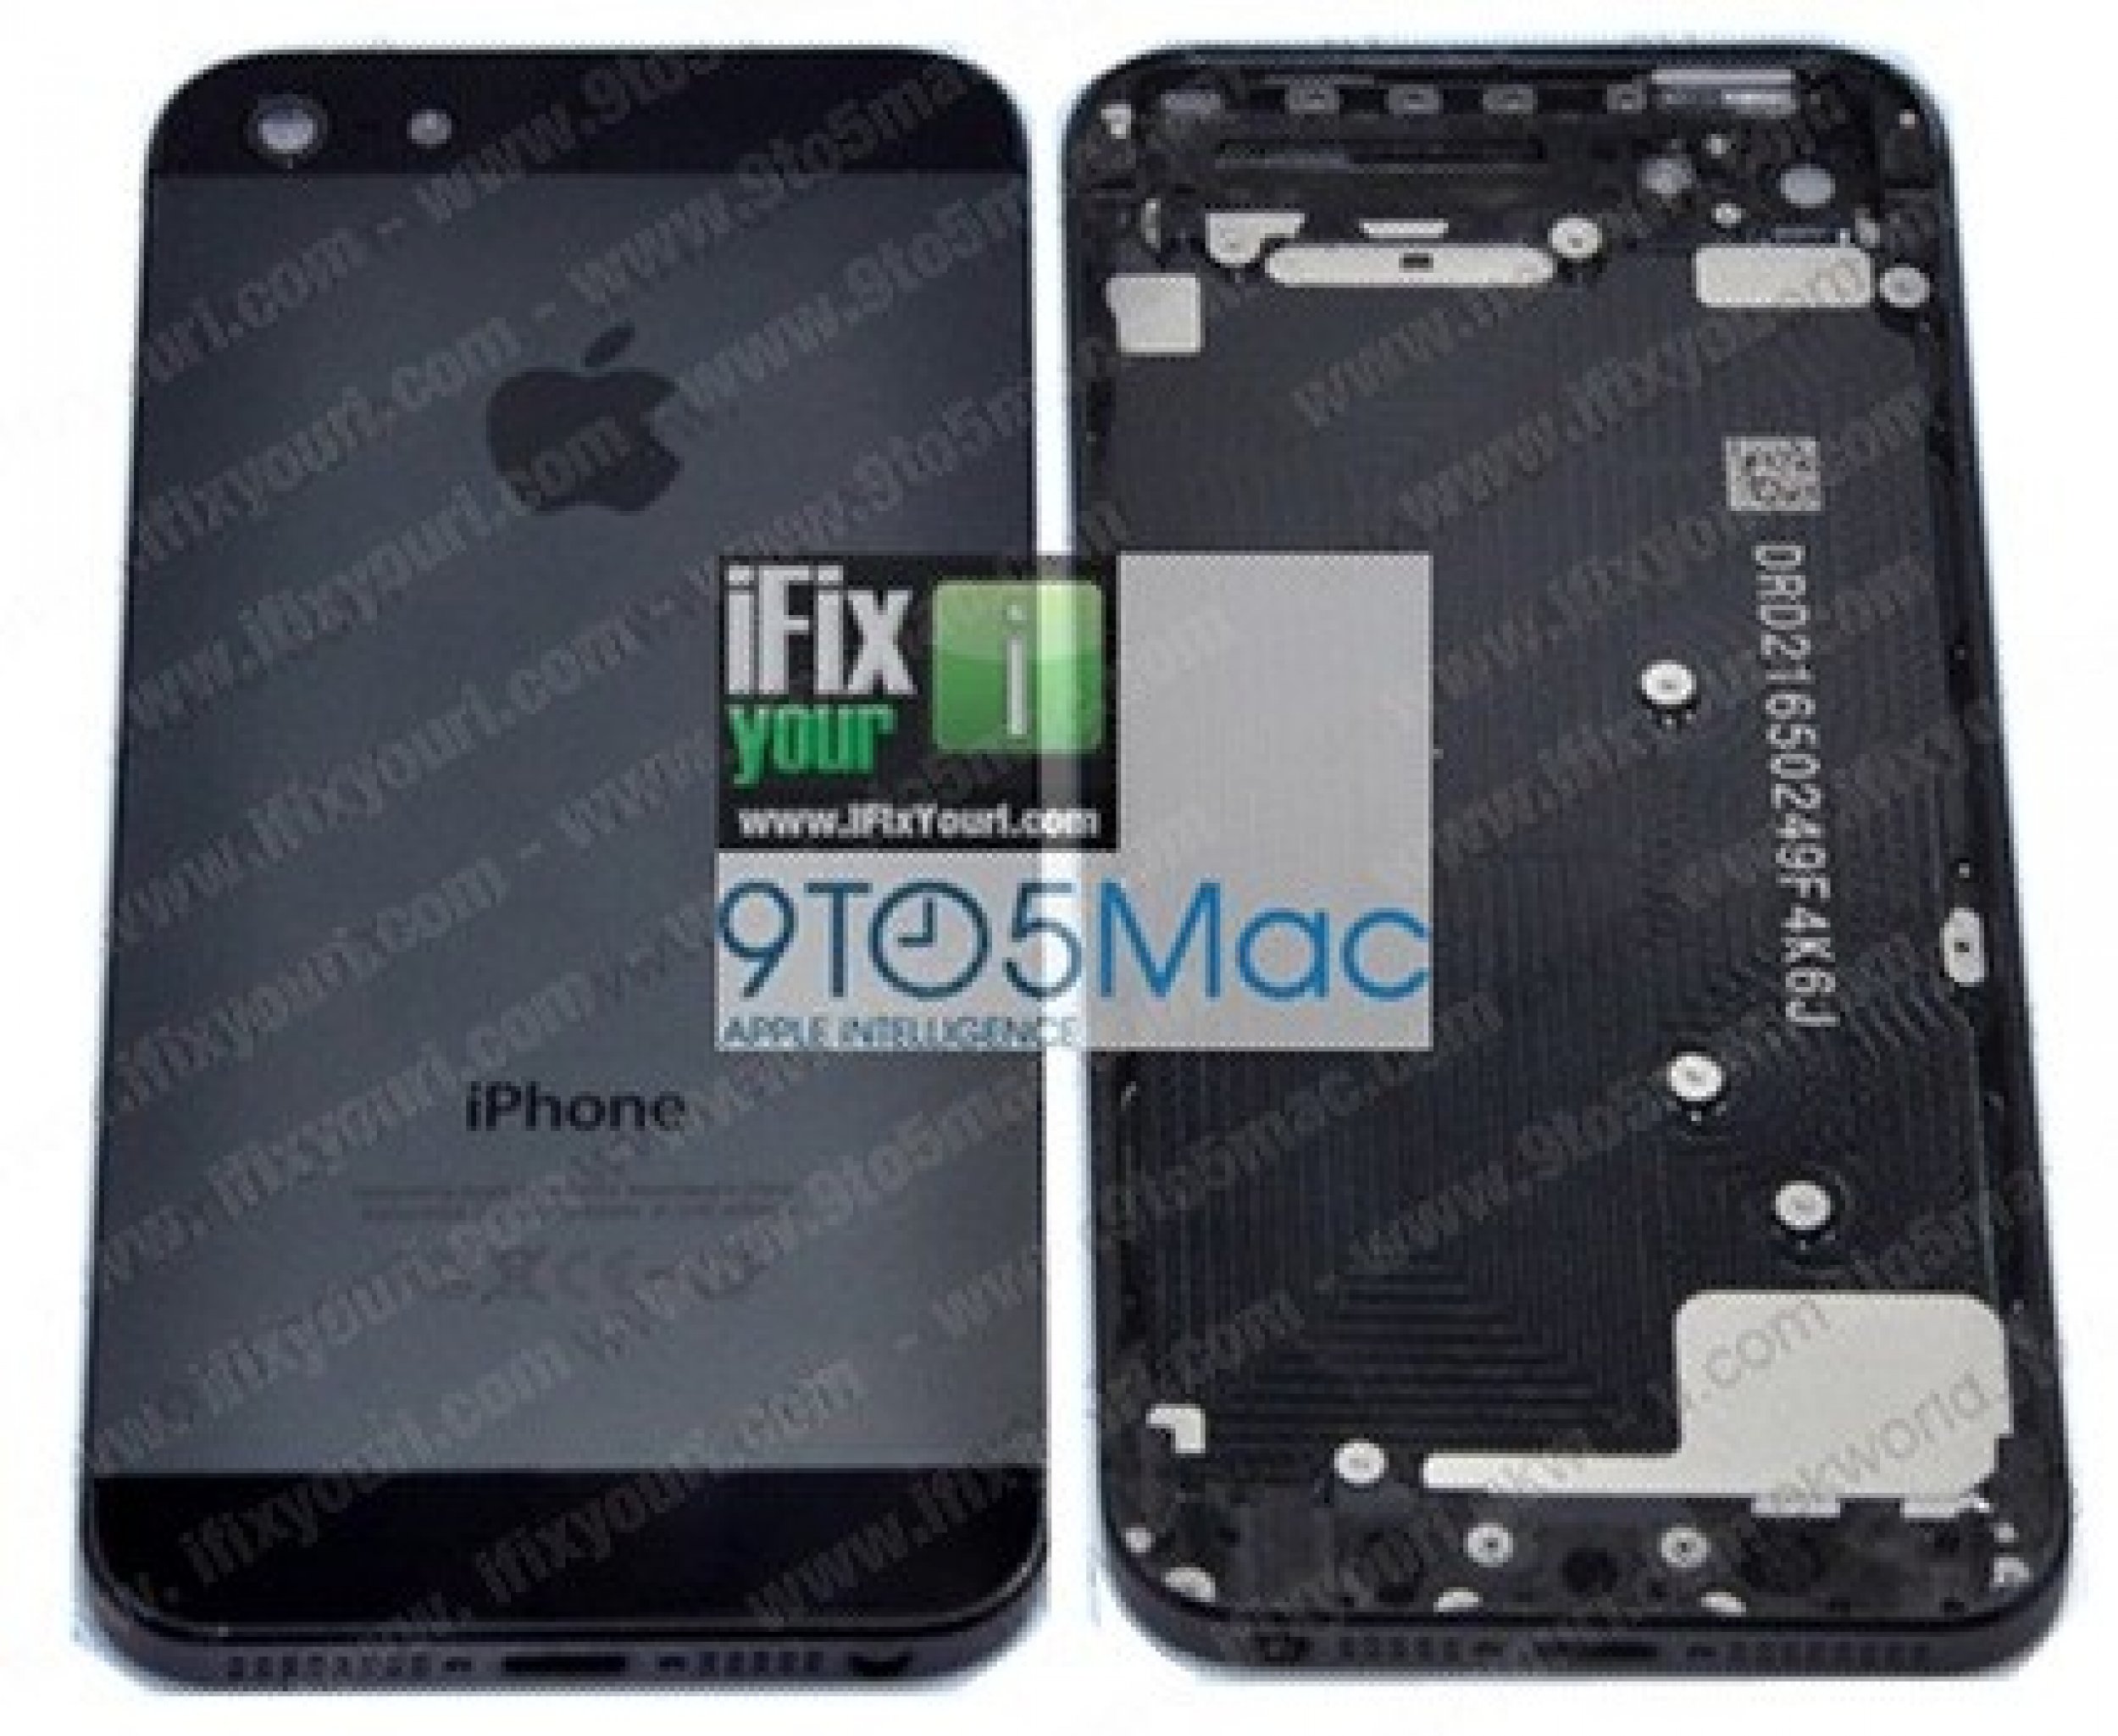 Apple iPhone 5 Major Features, Specs, Schematics Released By Repair Site REPORT